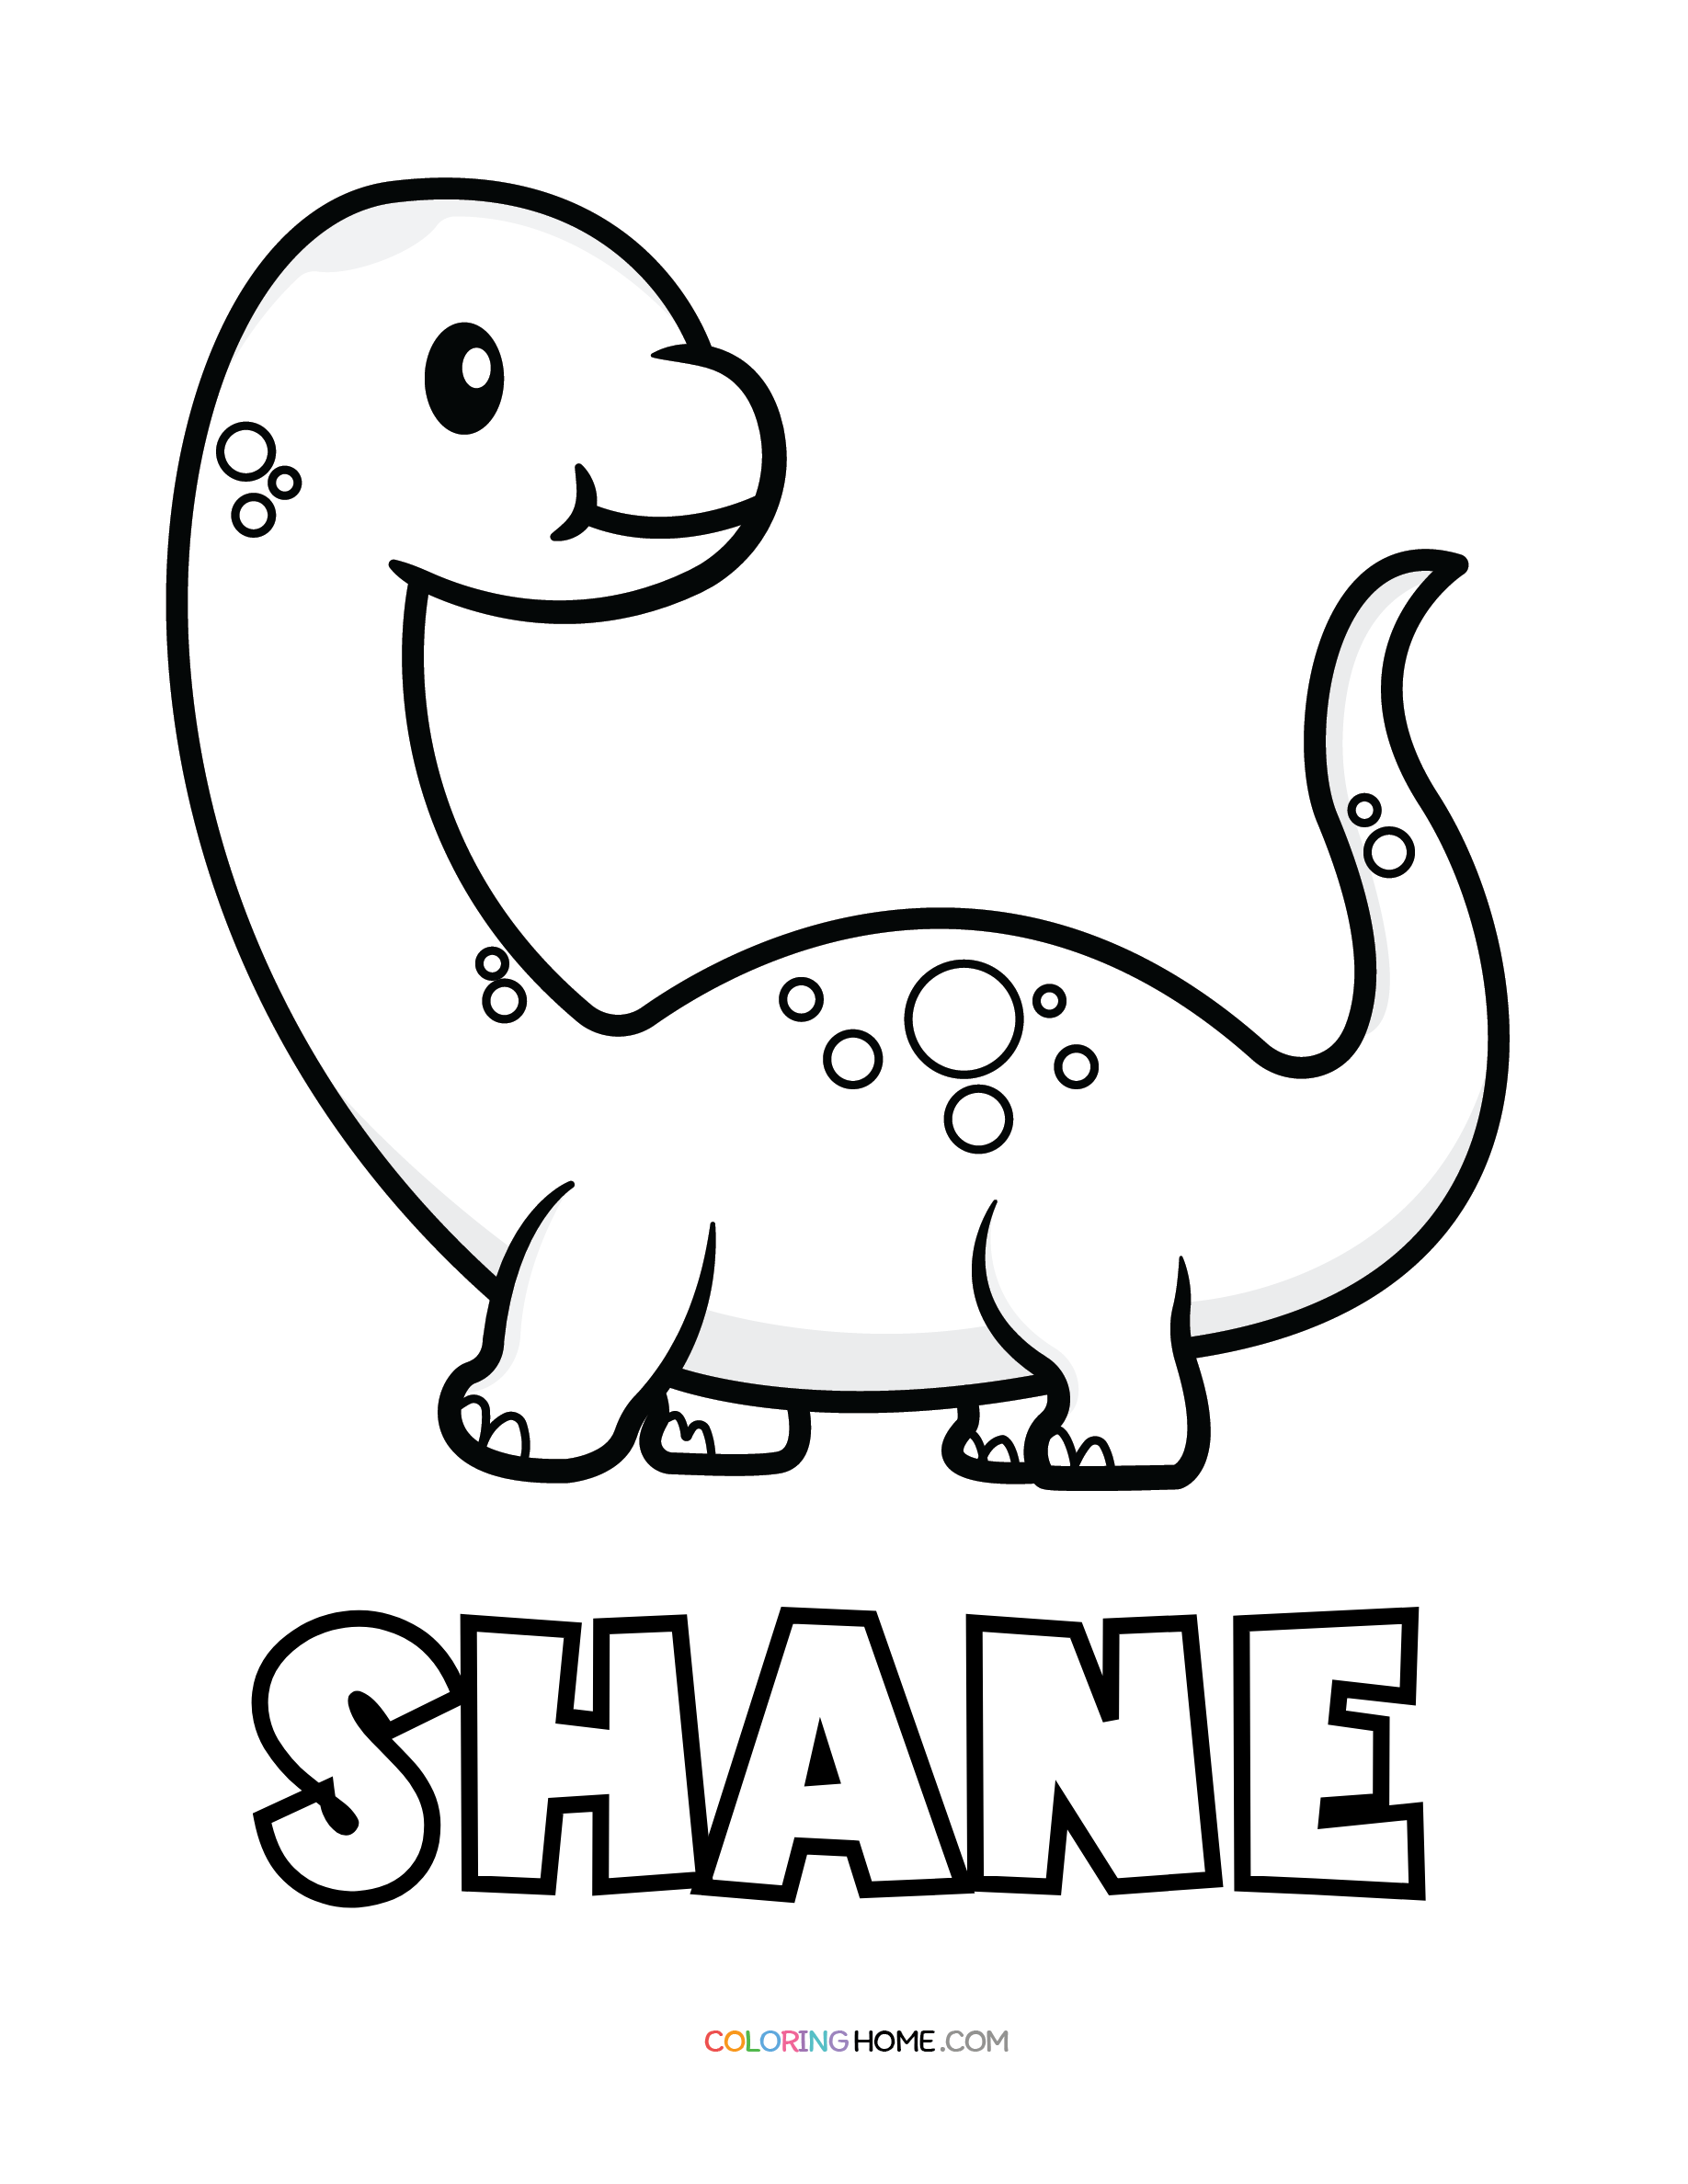 Shane dinosaur coloring page